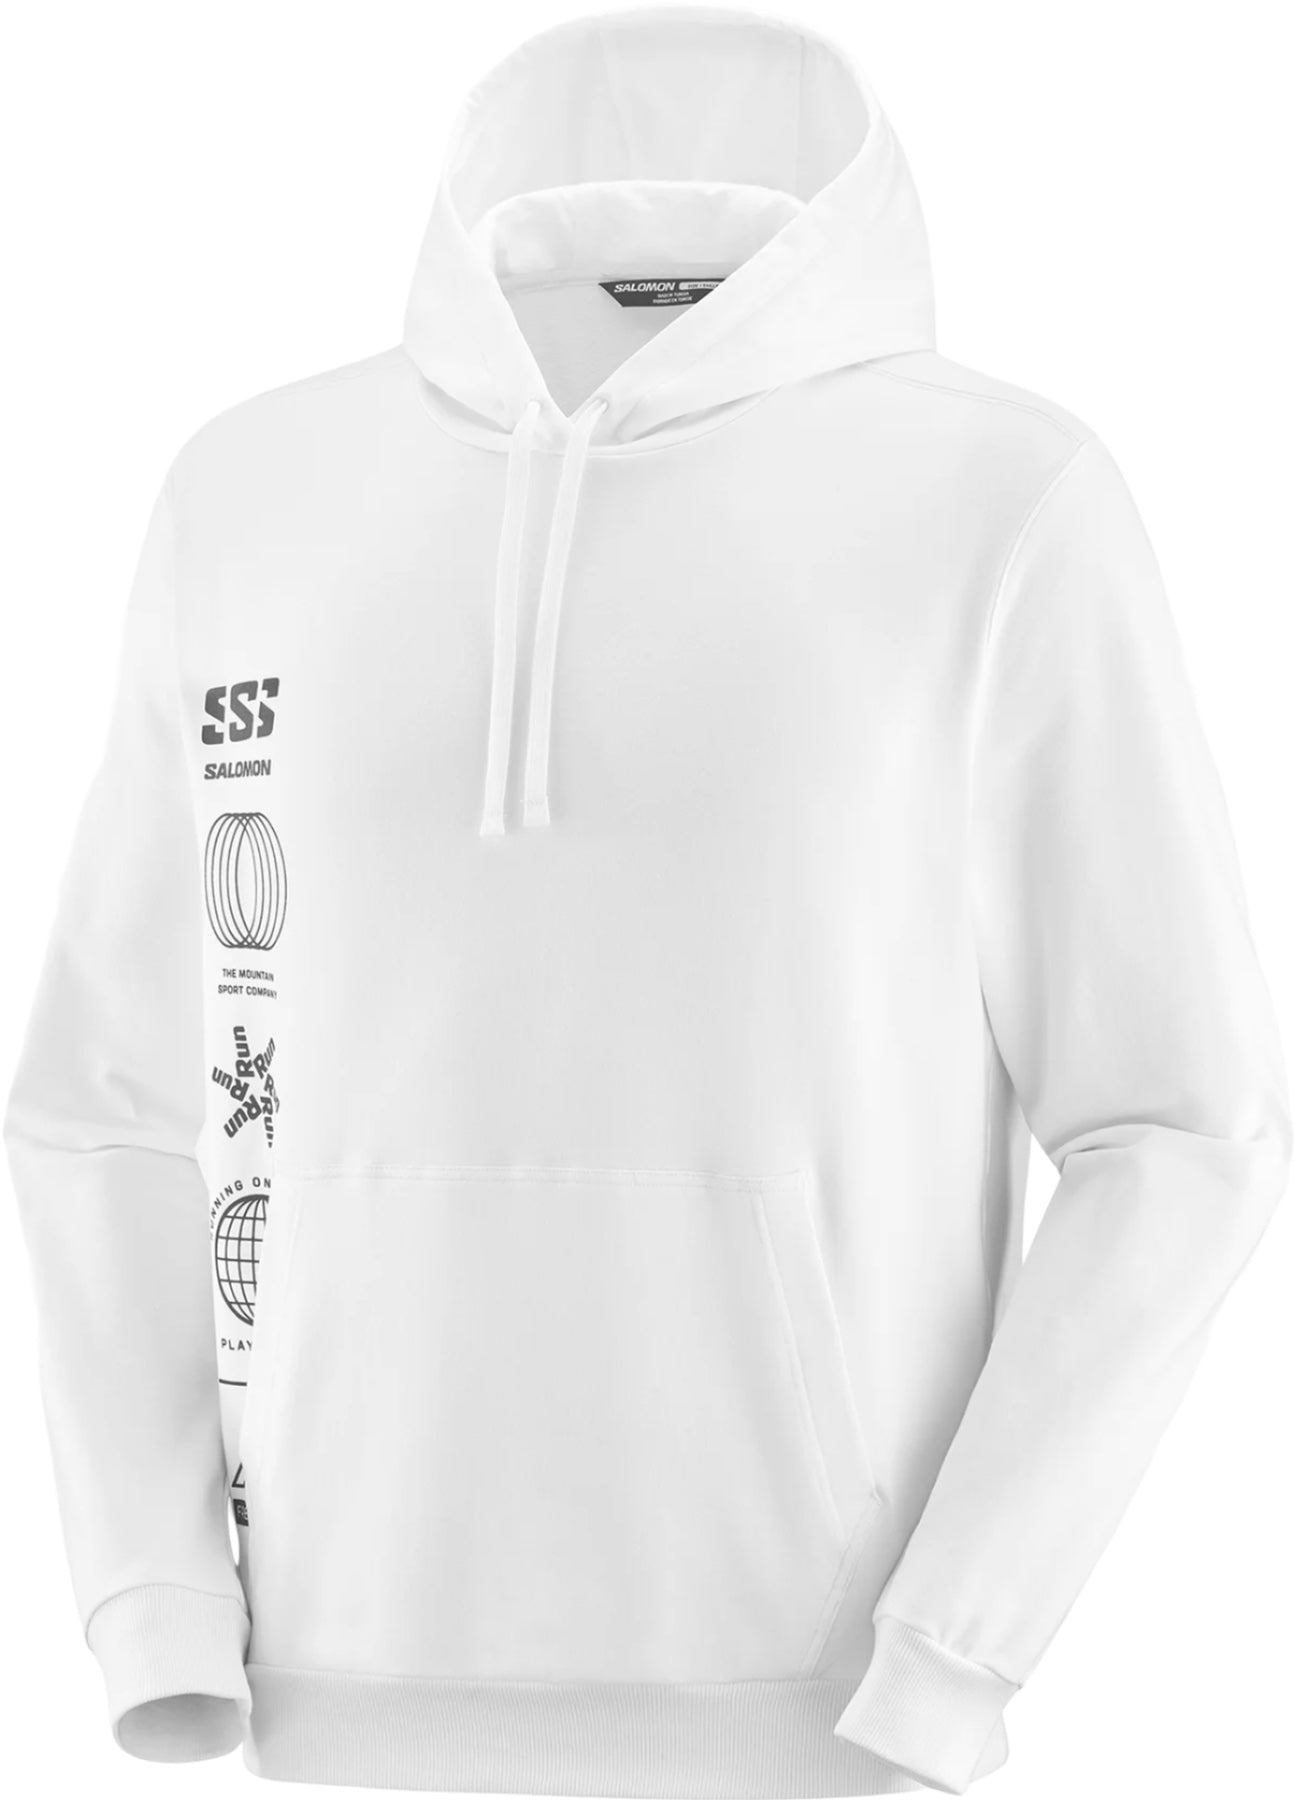 Salomon Graphic Hooded Sweatshirt - Men's XXL White